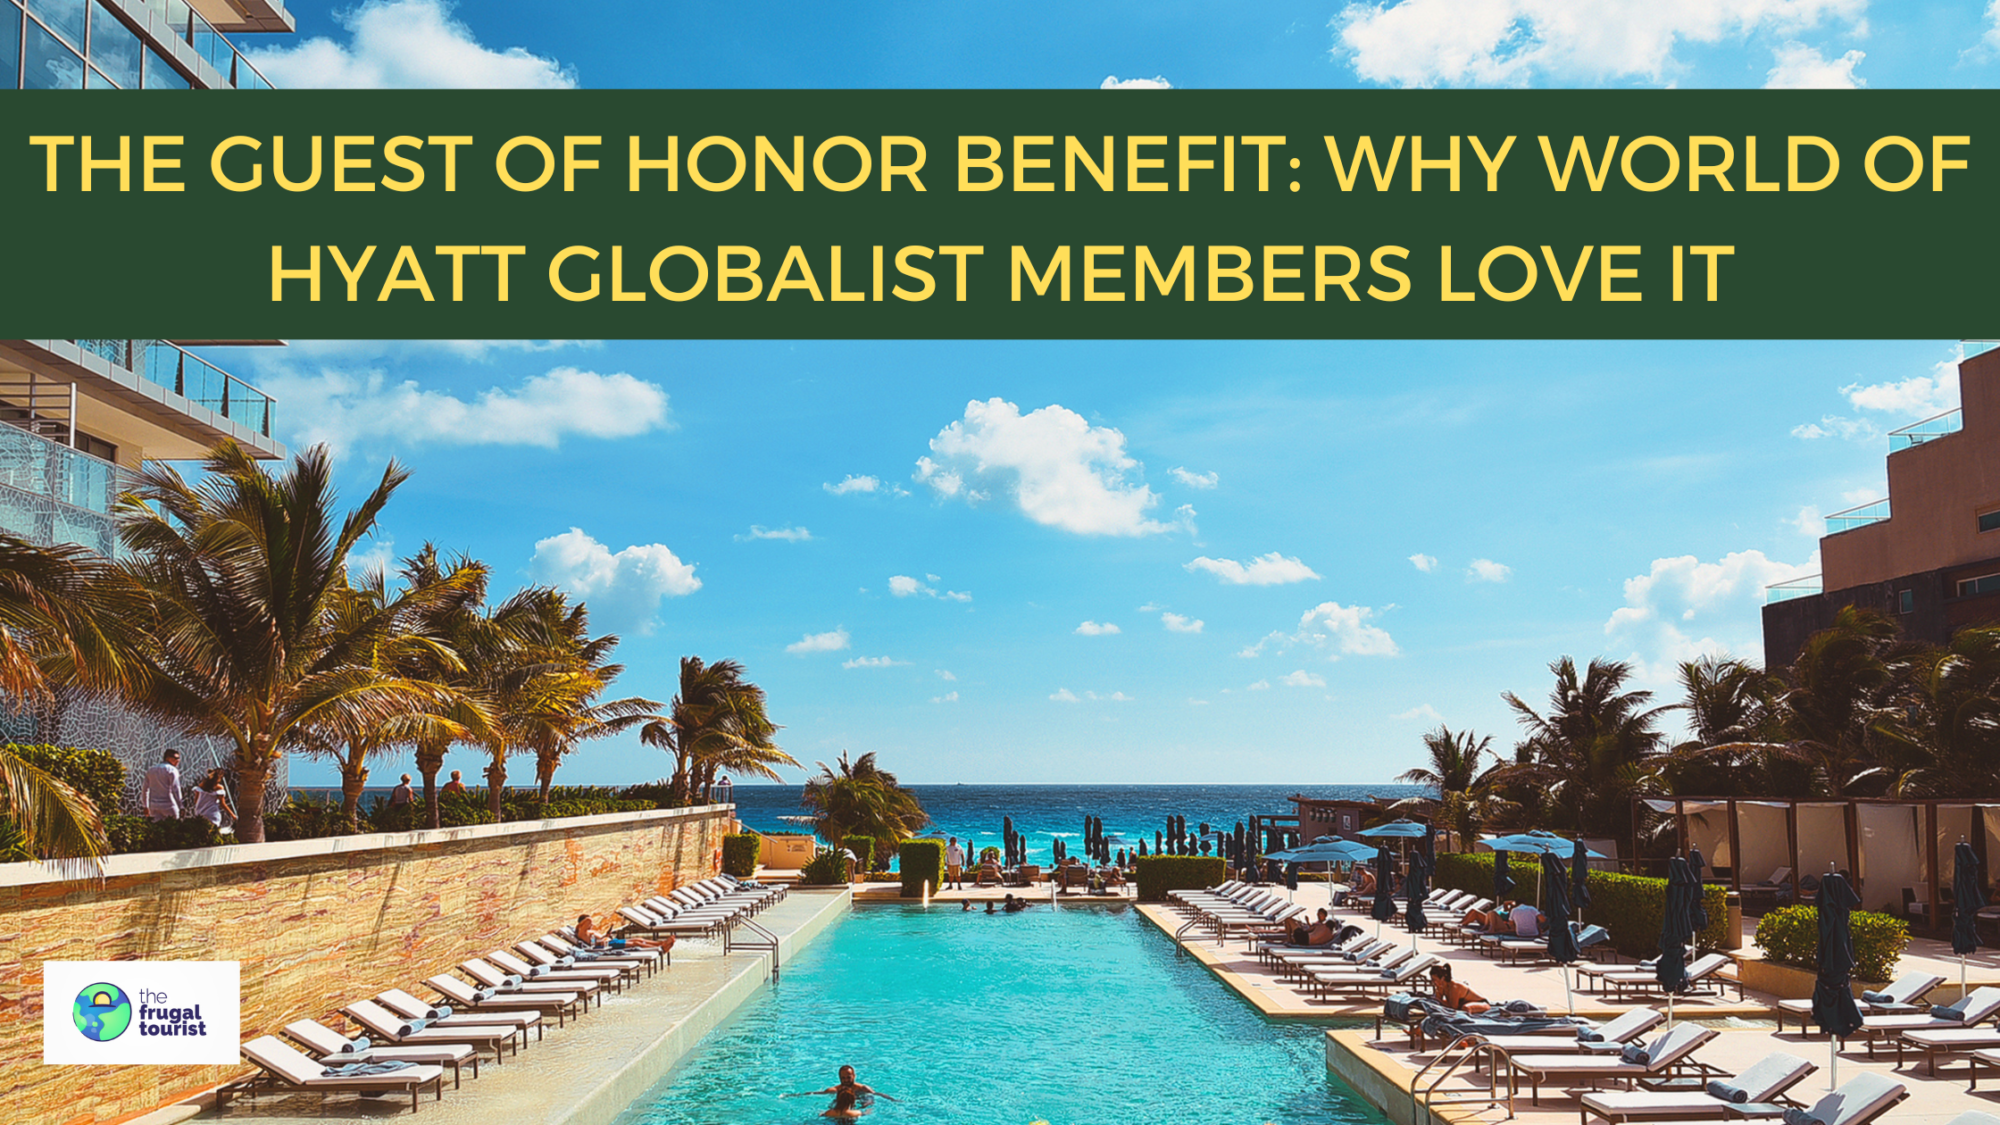 The Guest of Honor Benefit: Why World of Hyatt Globalist Members Love It